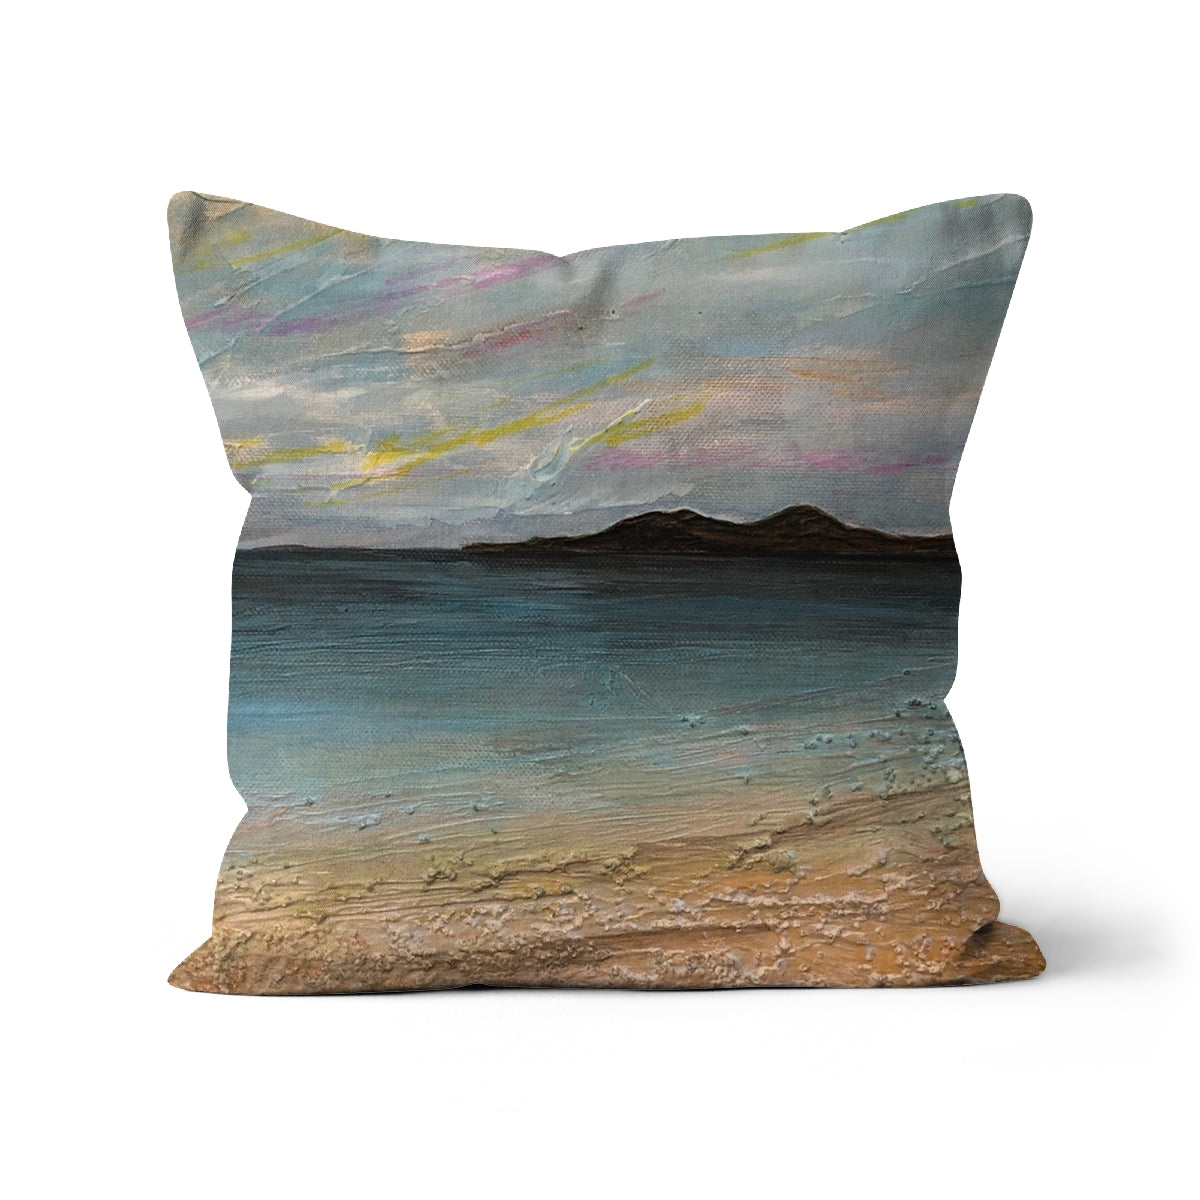 Garrynamonie Beach South Uist Art Gifts Cushion-Cushions-Hebridean Islands Art Gallery-Canvas-16"x16"-Paintings, Prints, Homeware, Art Gifts From Scotland By Scottish Artist Kevin Hunter